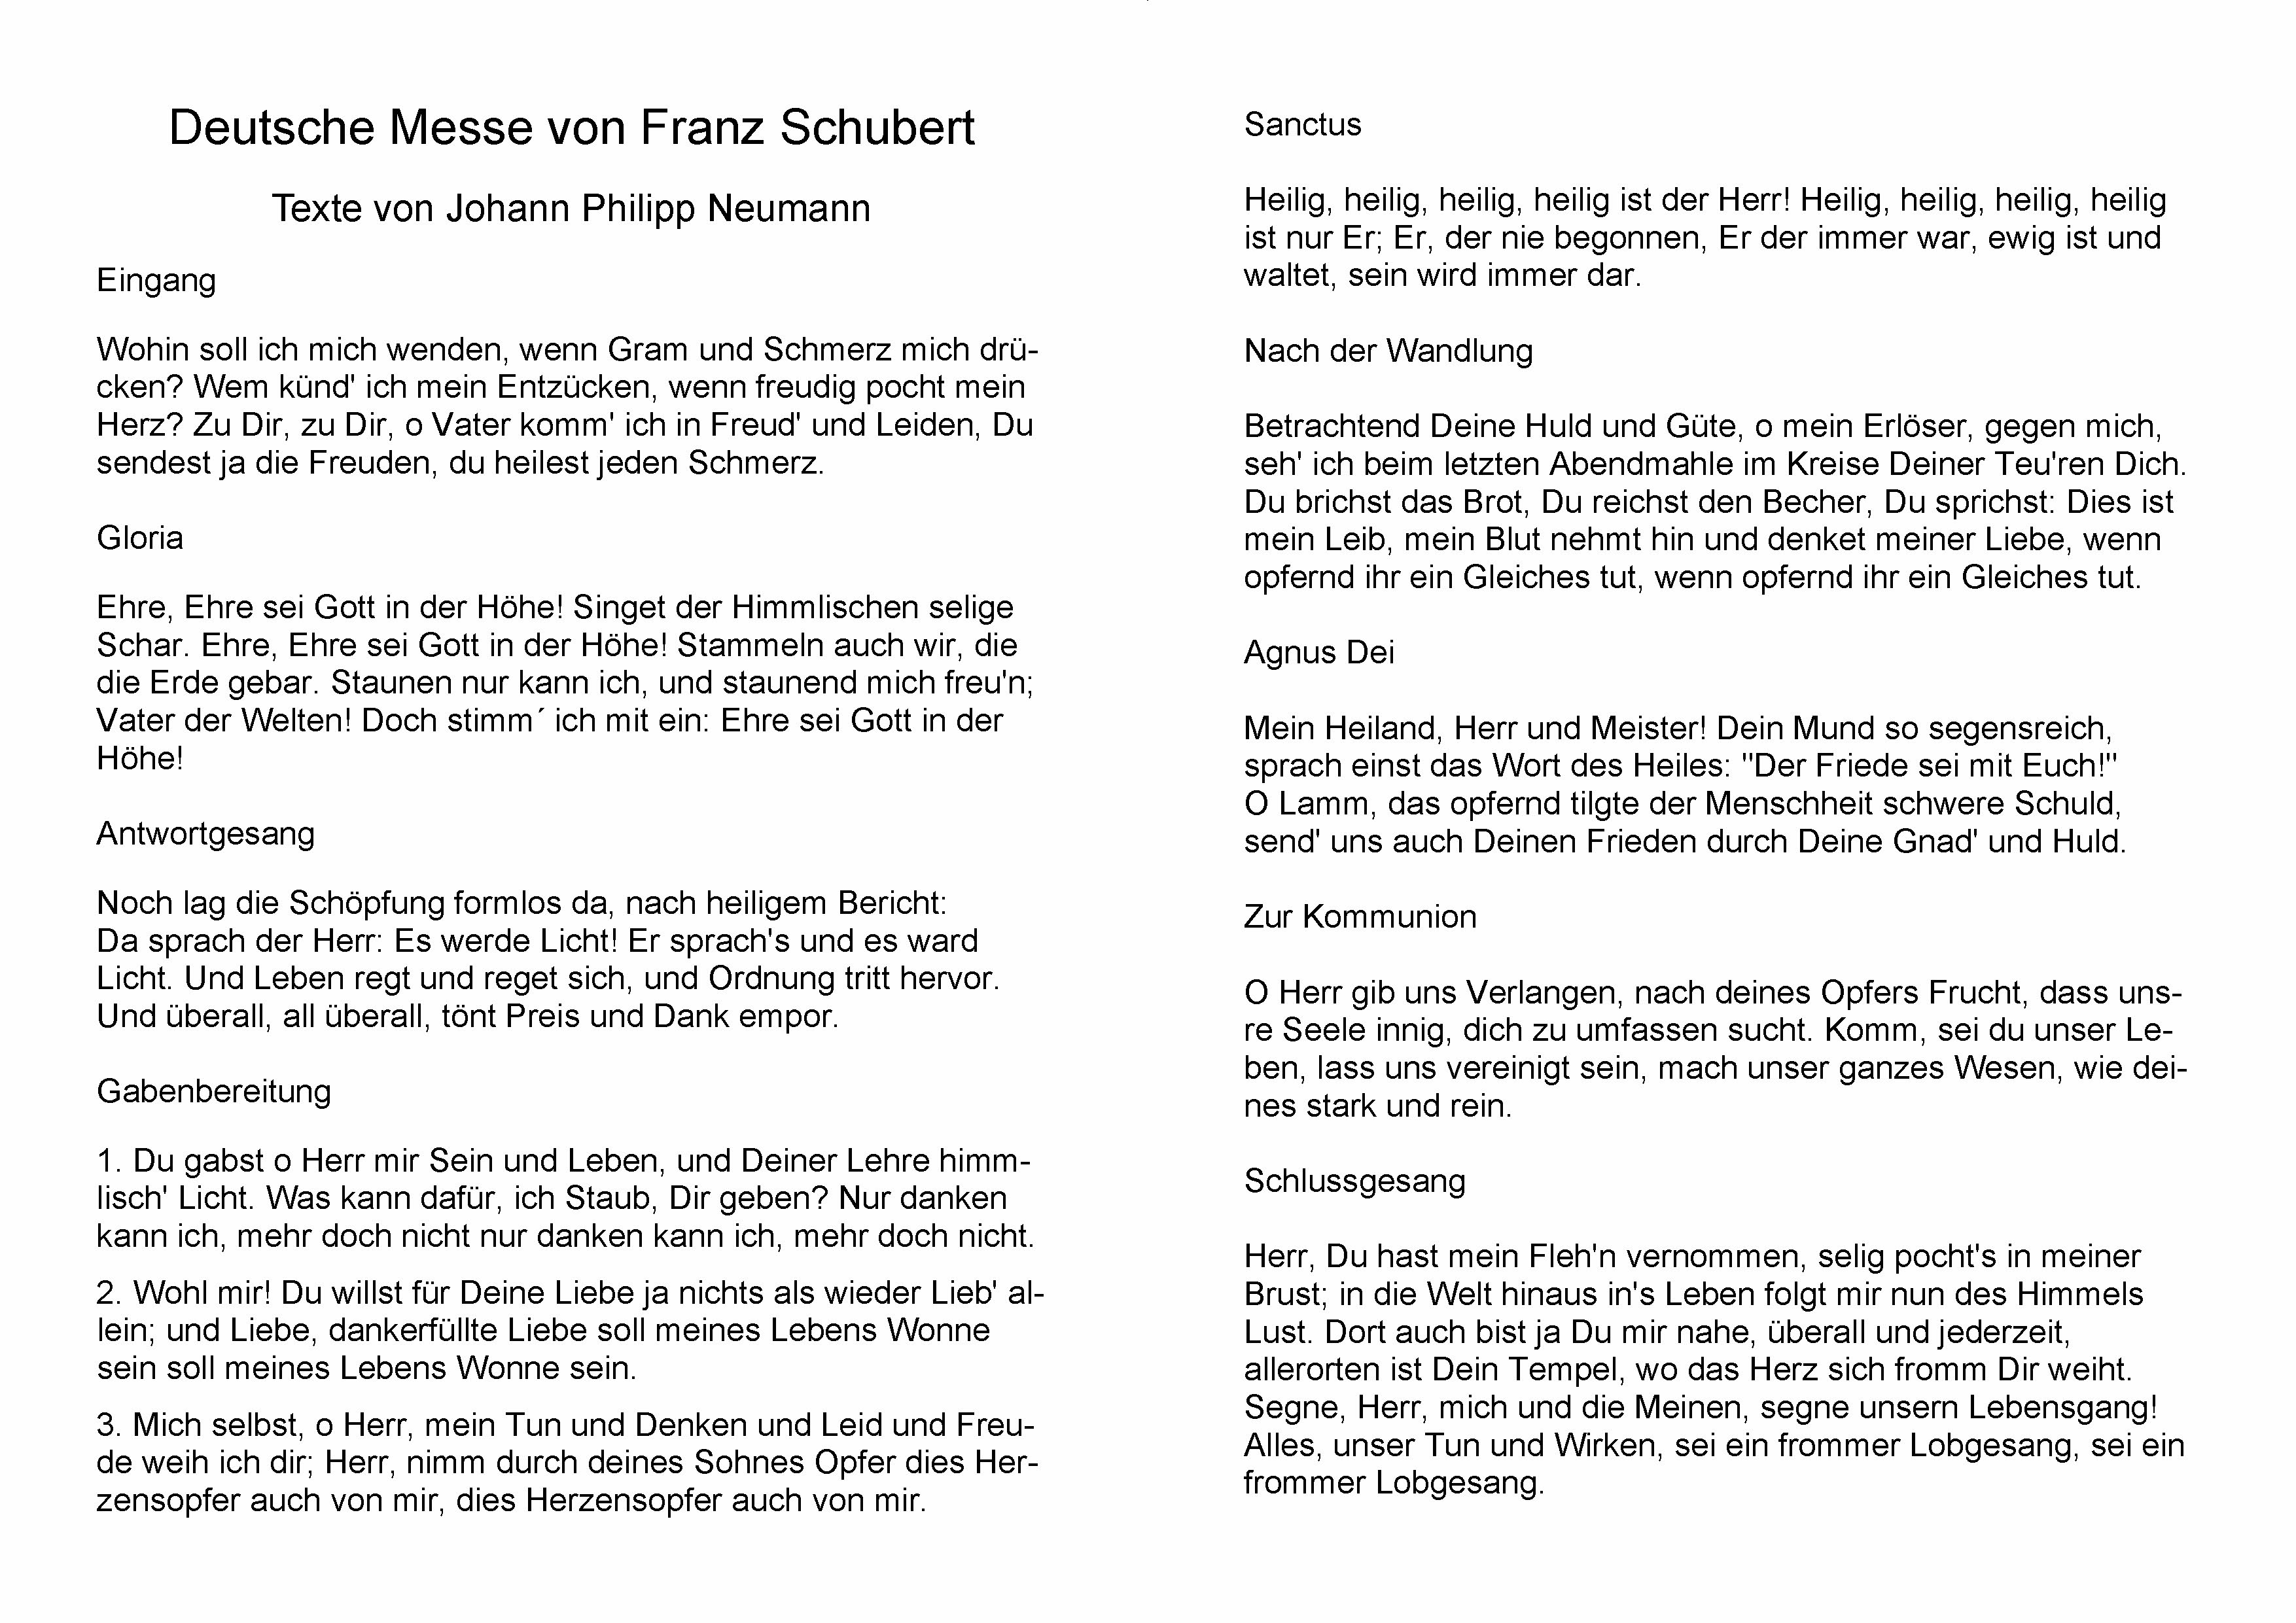 Schubertmesse text